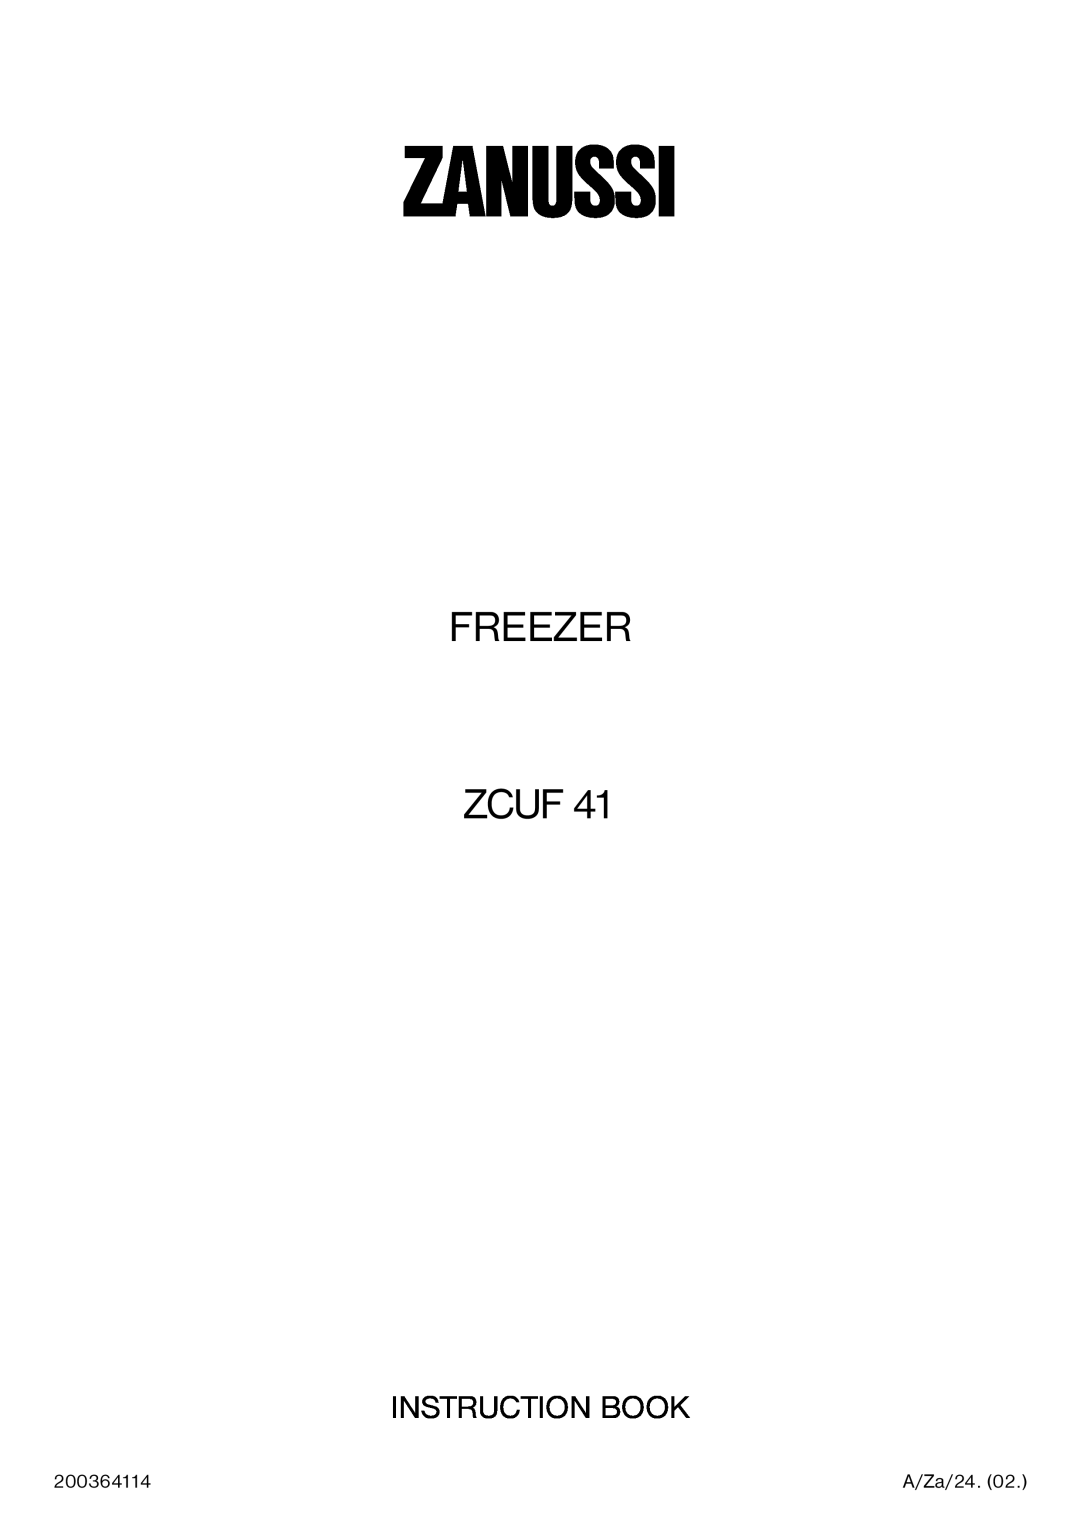 Zanussi ZCUF 41 manual Zanussi, Freezer Zcuf, Instruction Book 